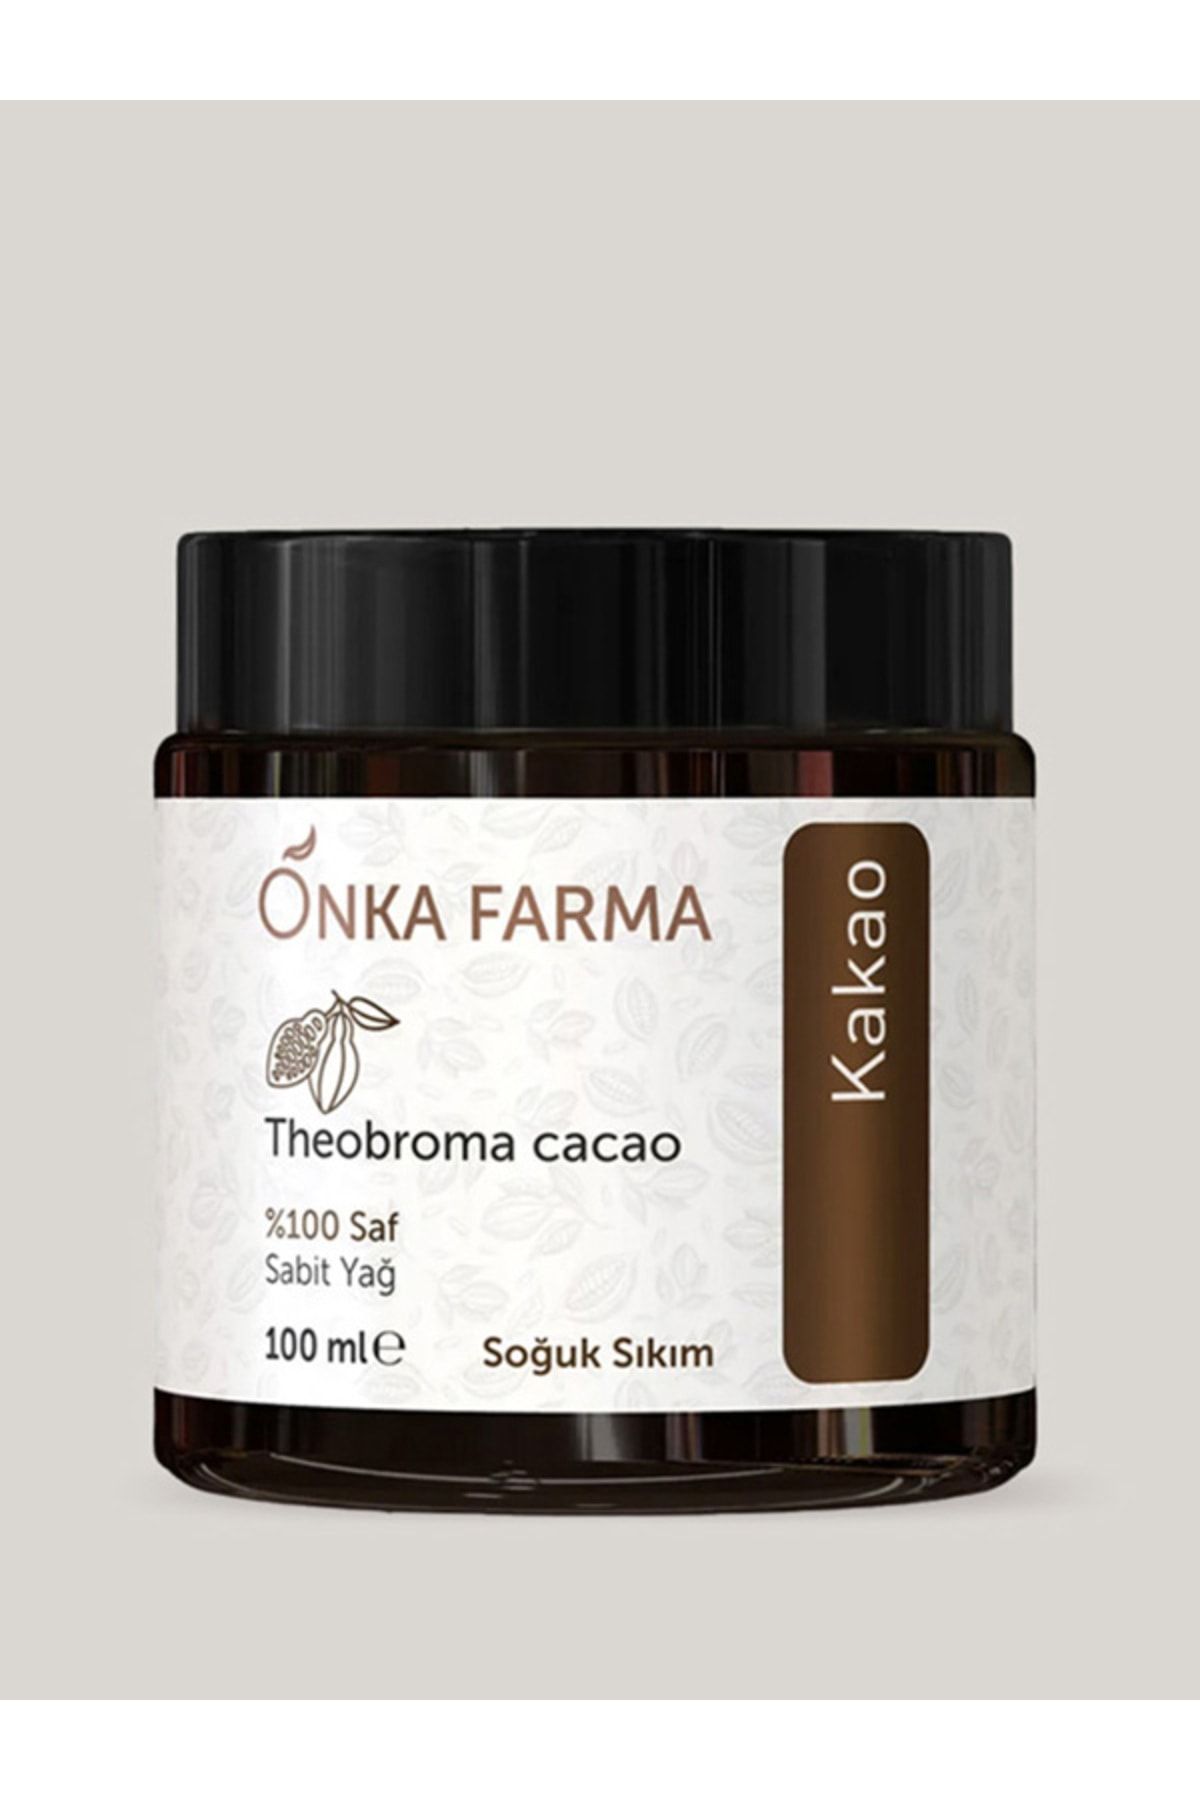 OnkaFarma Onka Farma Bronzlaştırıcı Kakao Yağı - Soğuk Sıkım %100 Saf Doğal Organik Kakao Yağı Spf - 100 ml